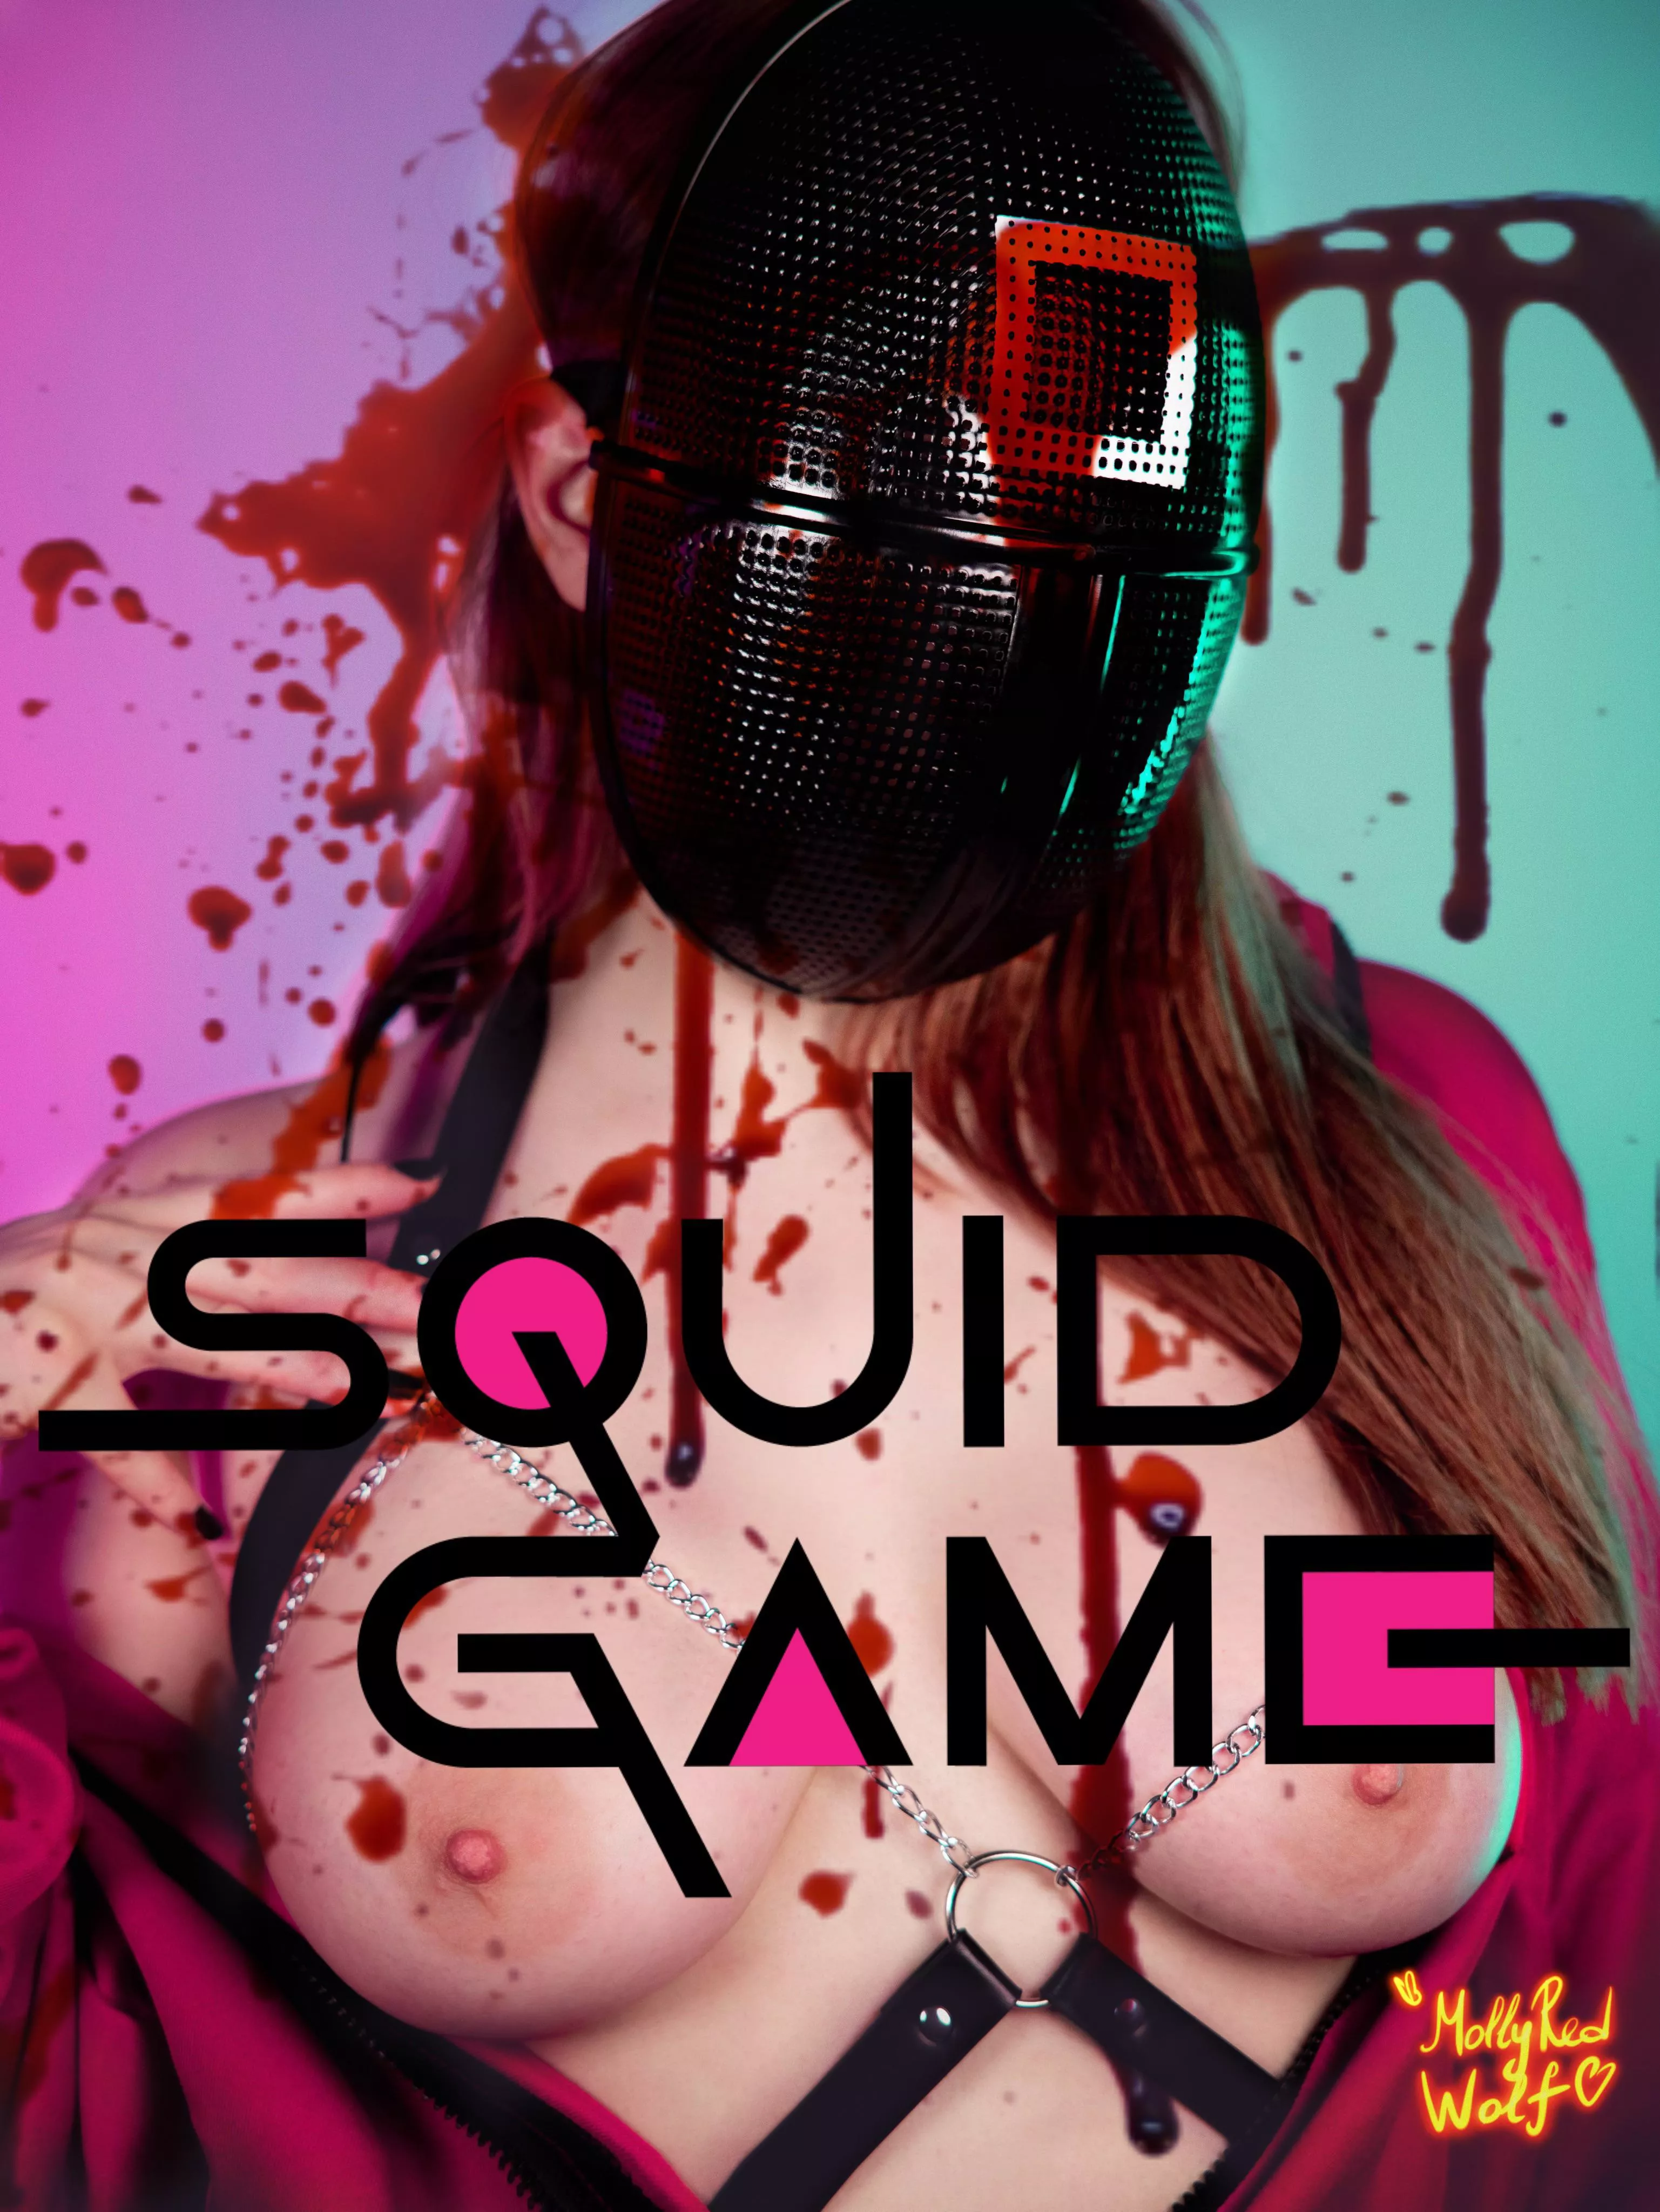 Squid games girl onlyfans